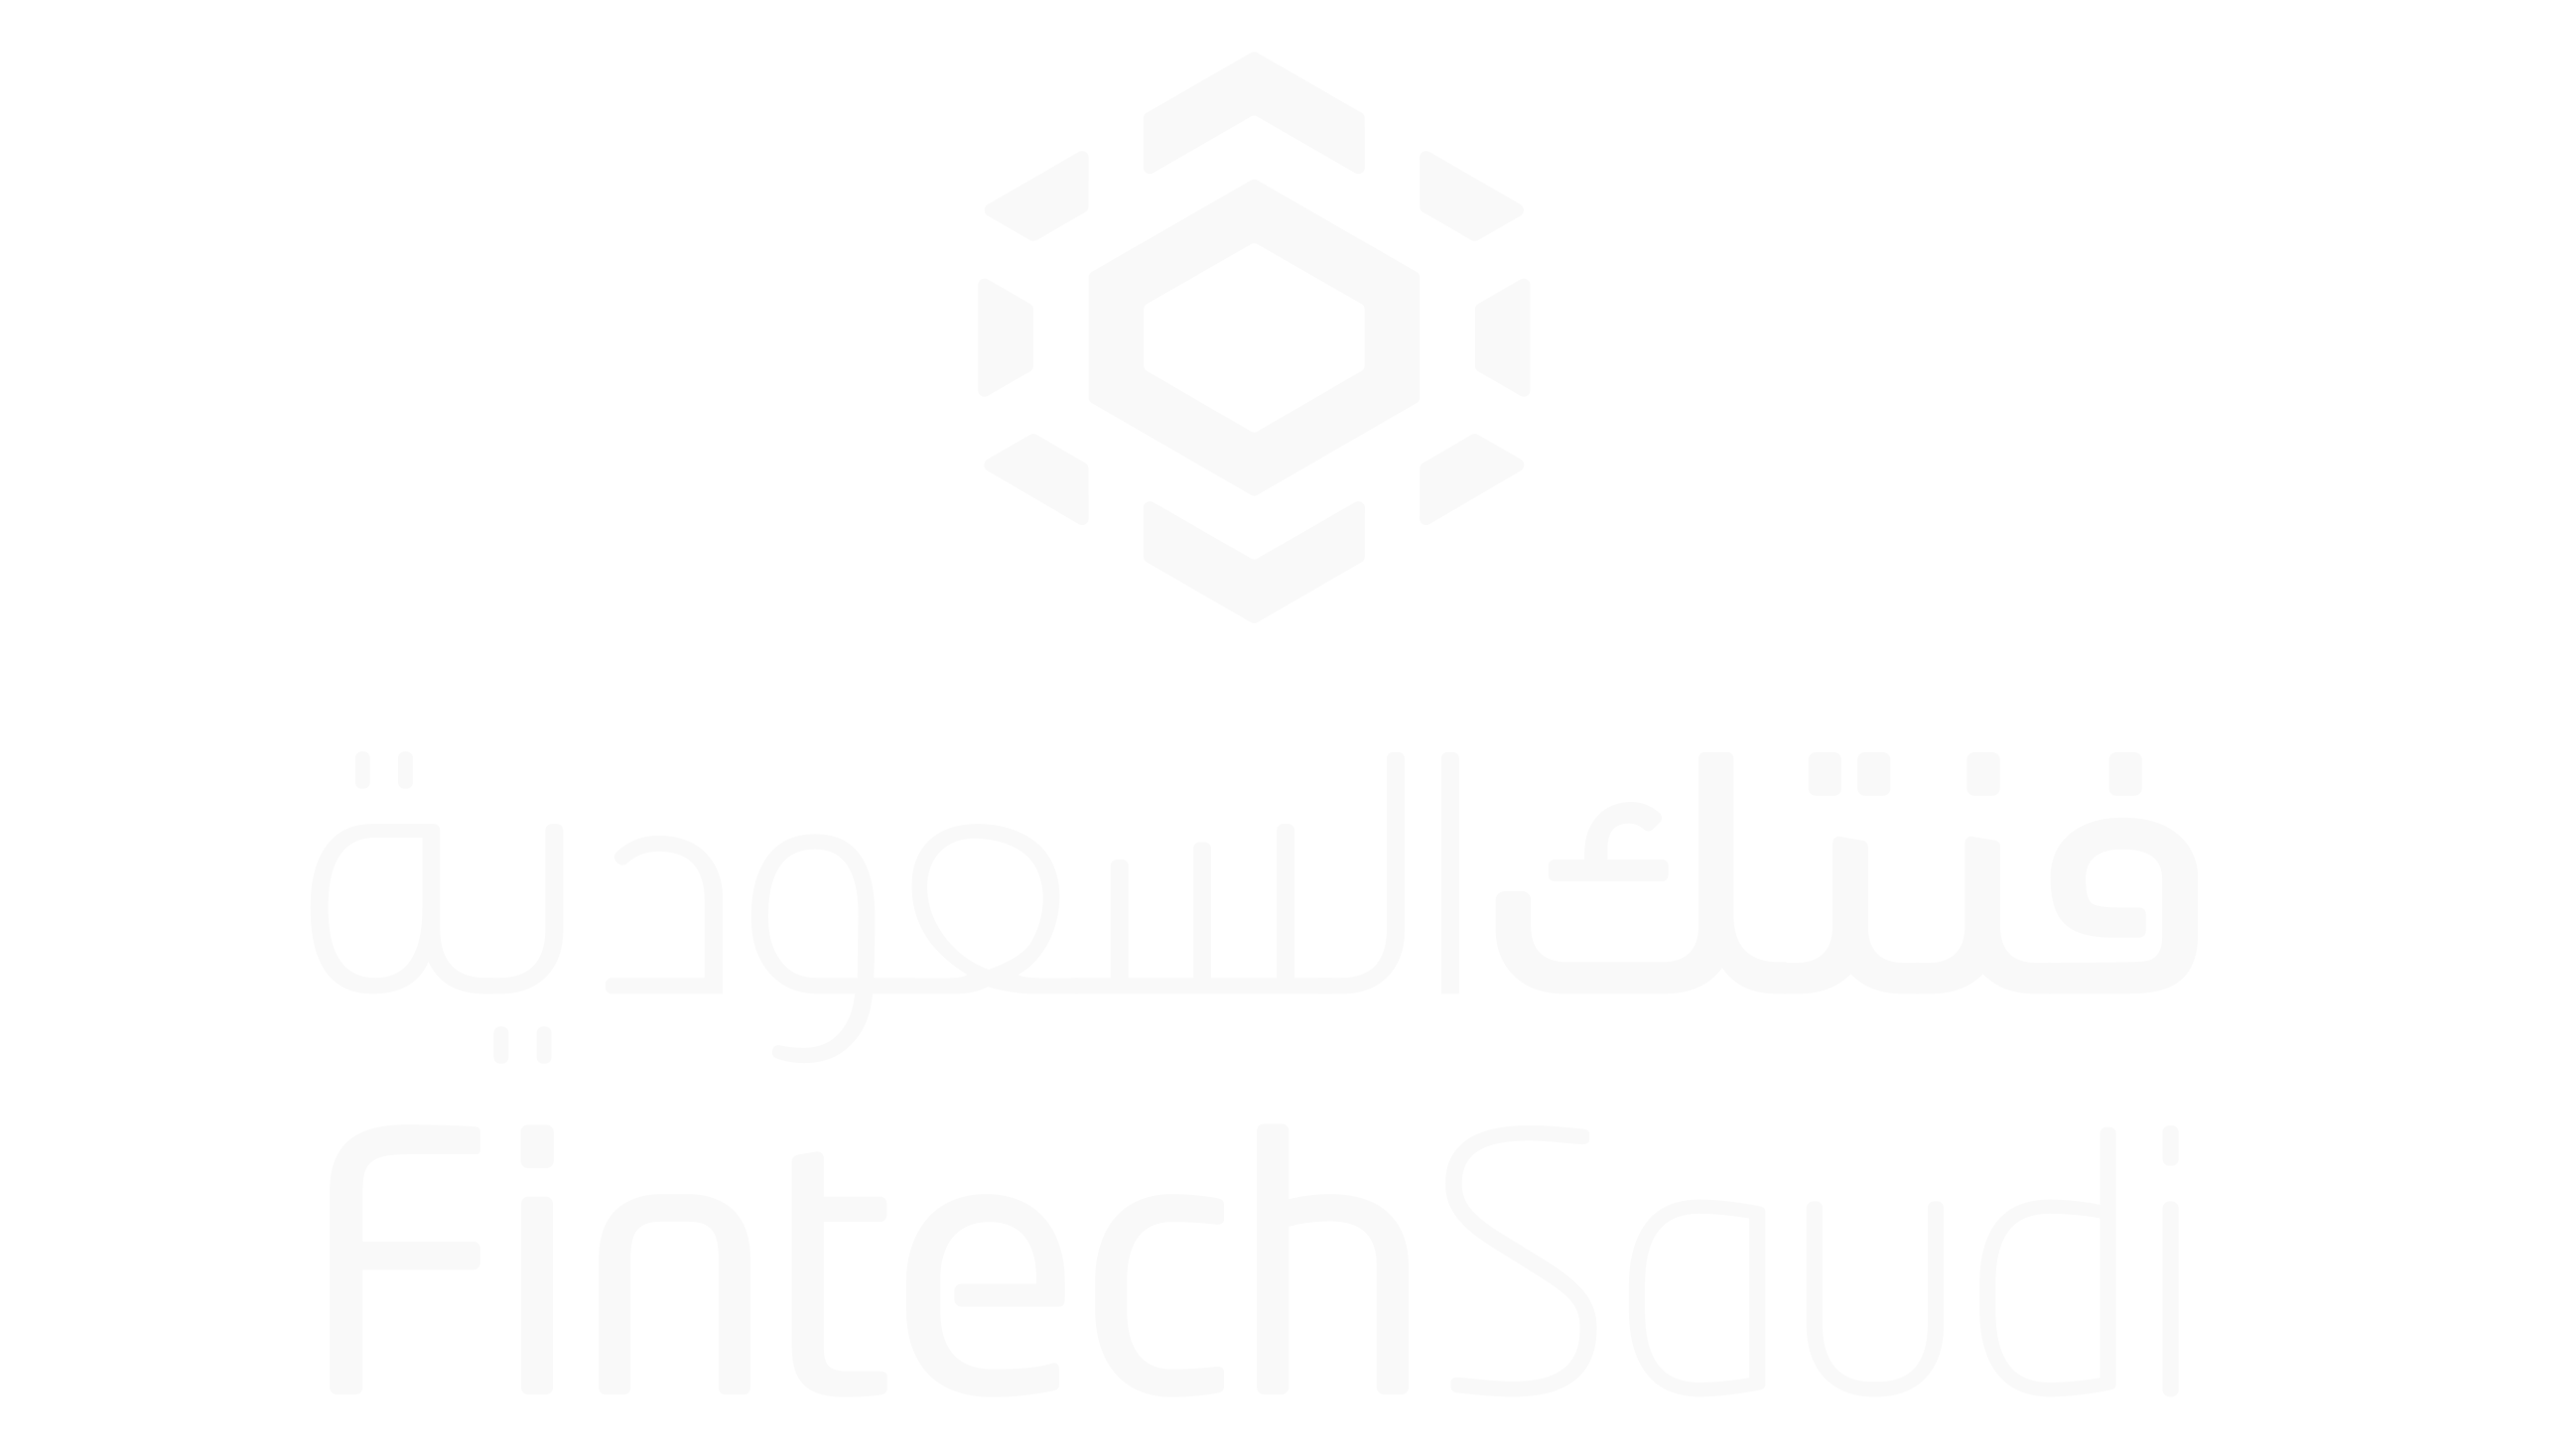 Fintech Saudi